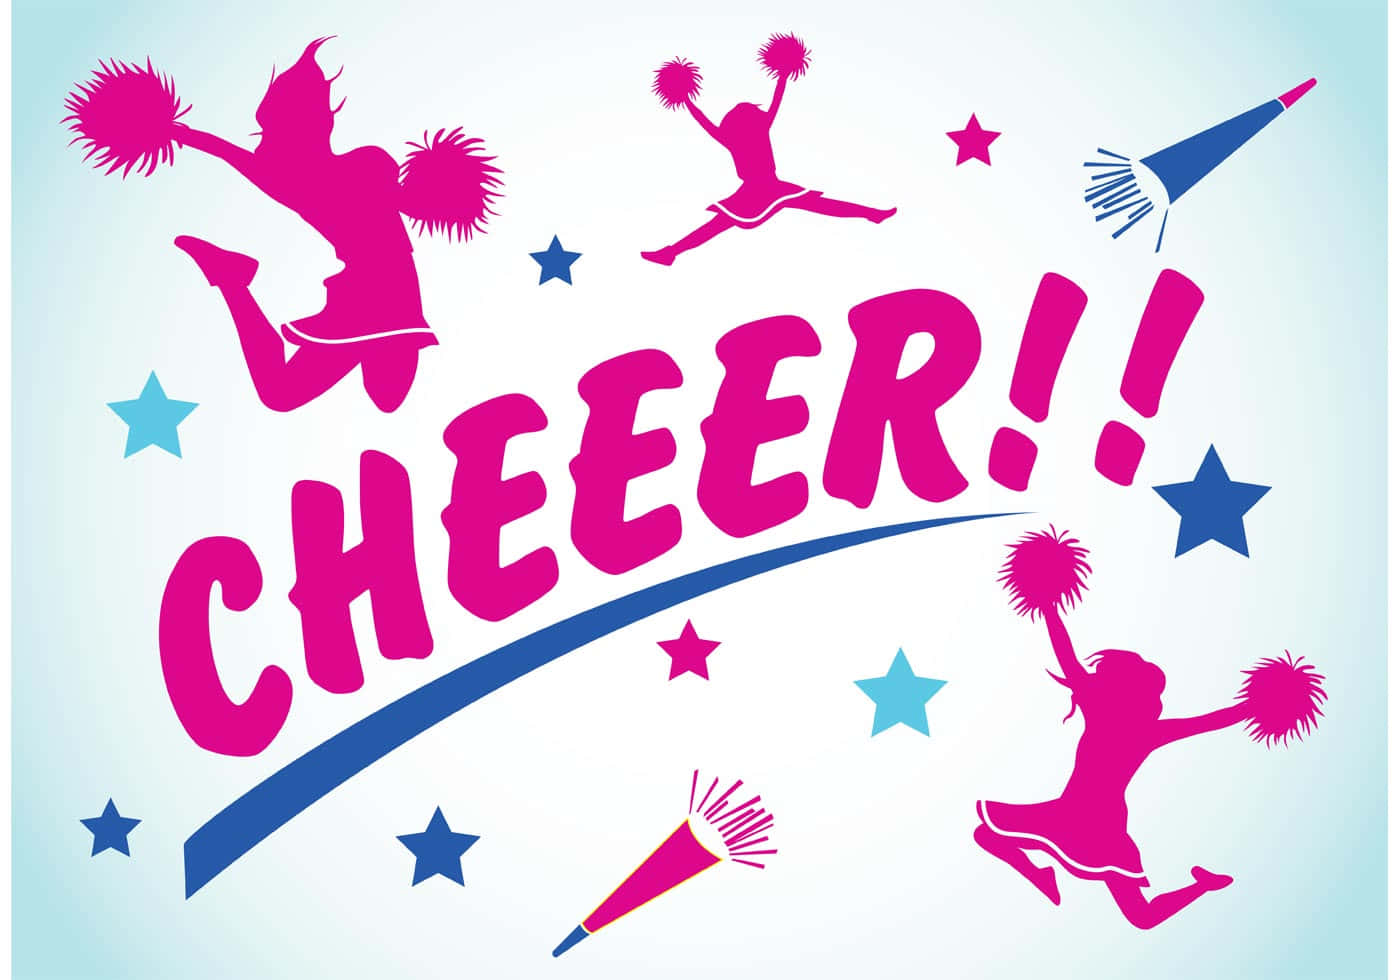 Vibrant Cheerleading Spirit Illustration Wallpaper